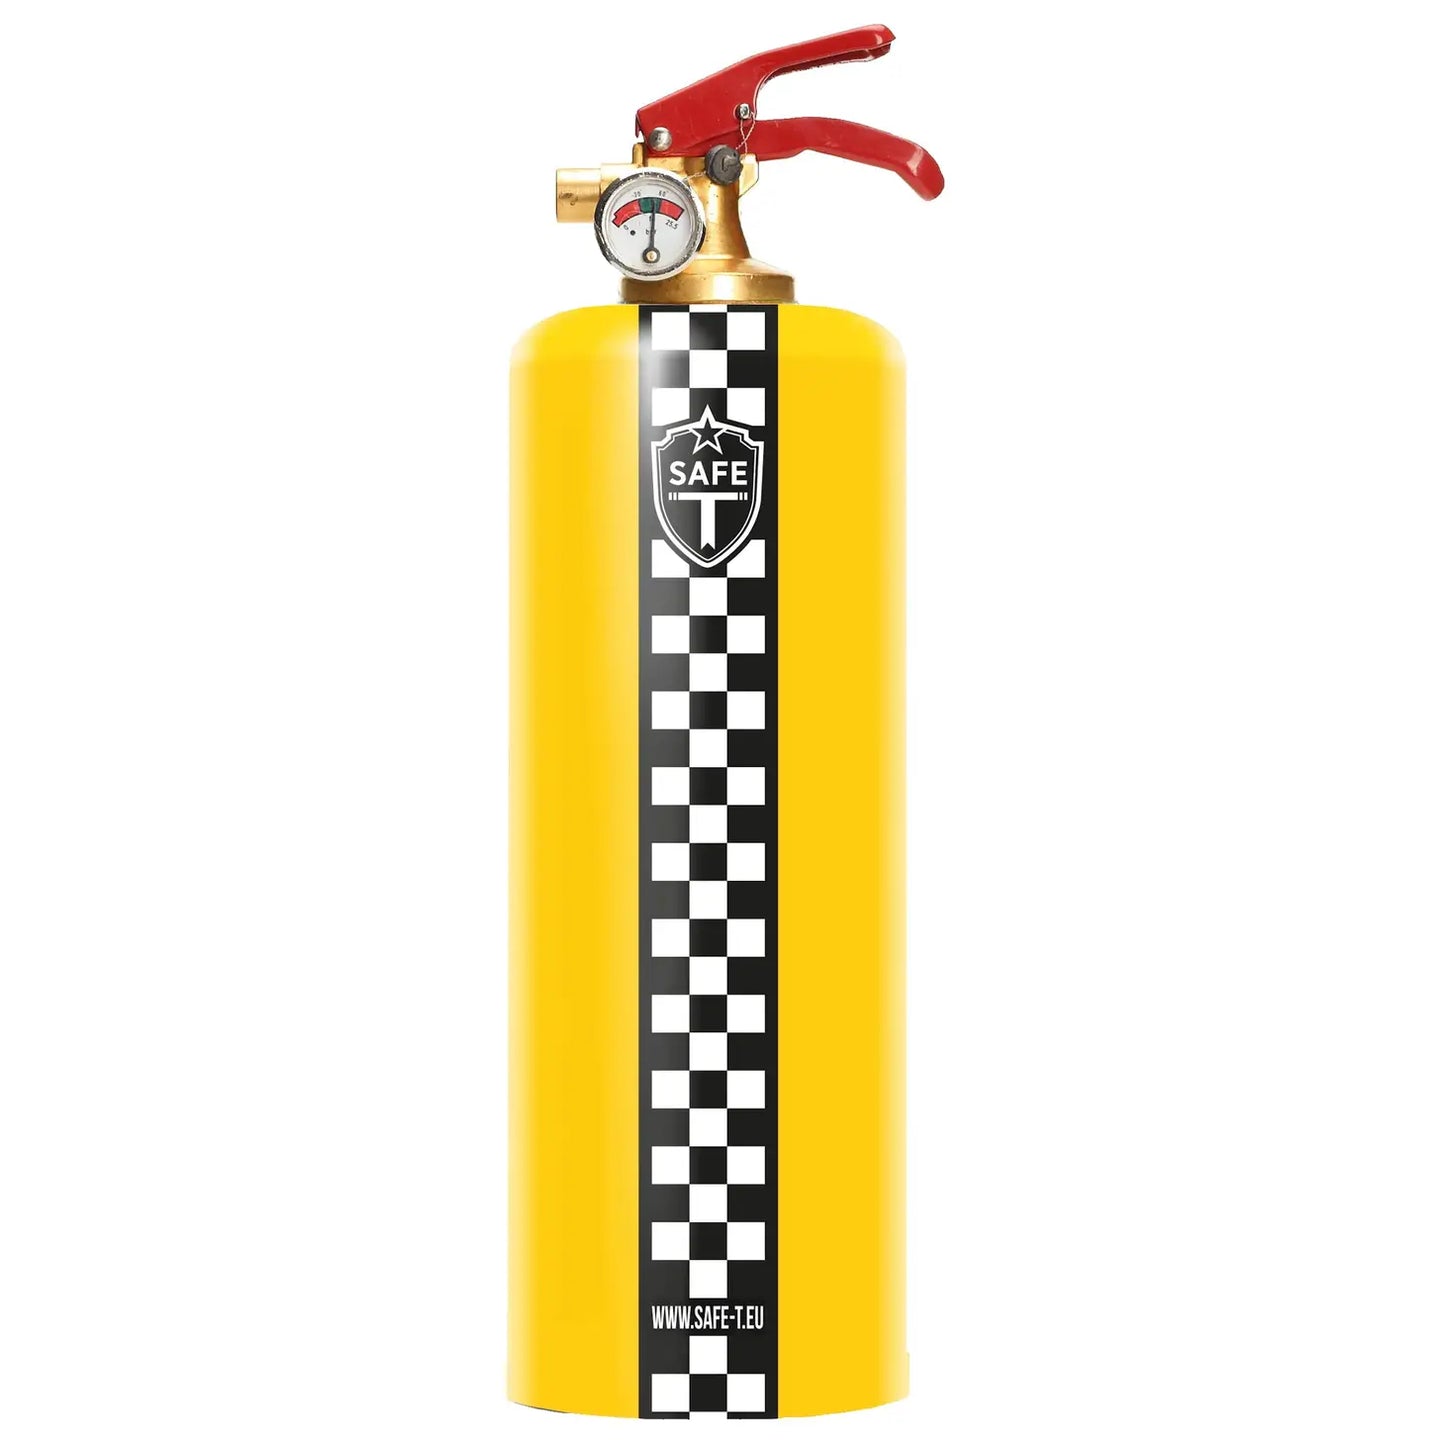 Design Fire Extinguishers